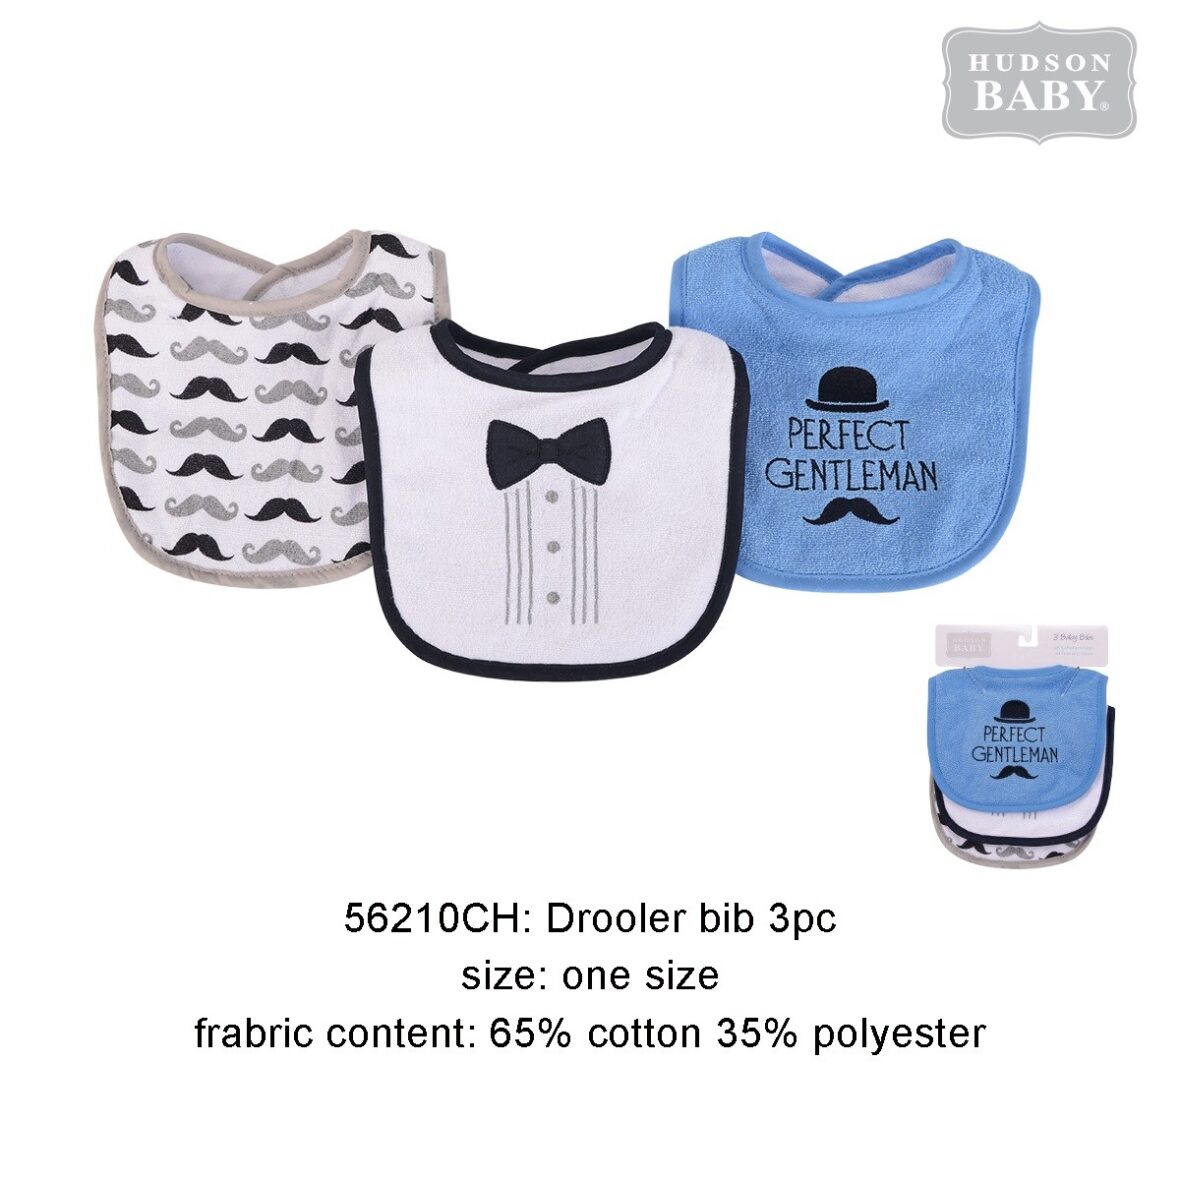 Hudson Baby Interlock Droller Baby Bibs – (3pcs)